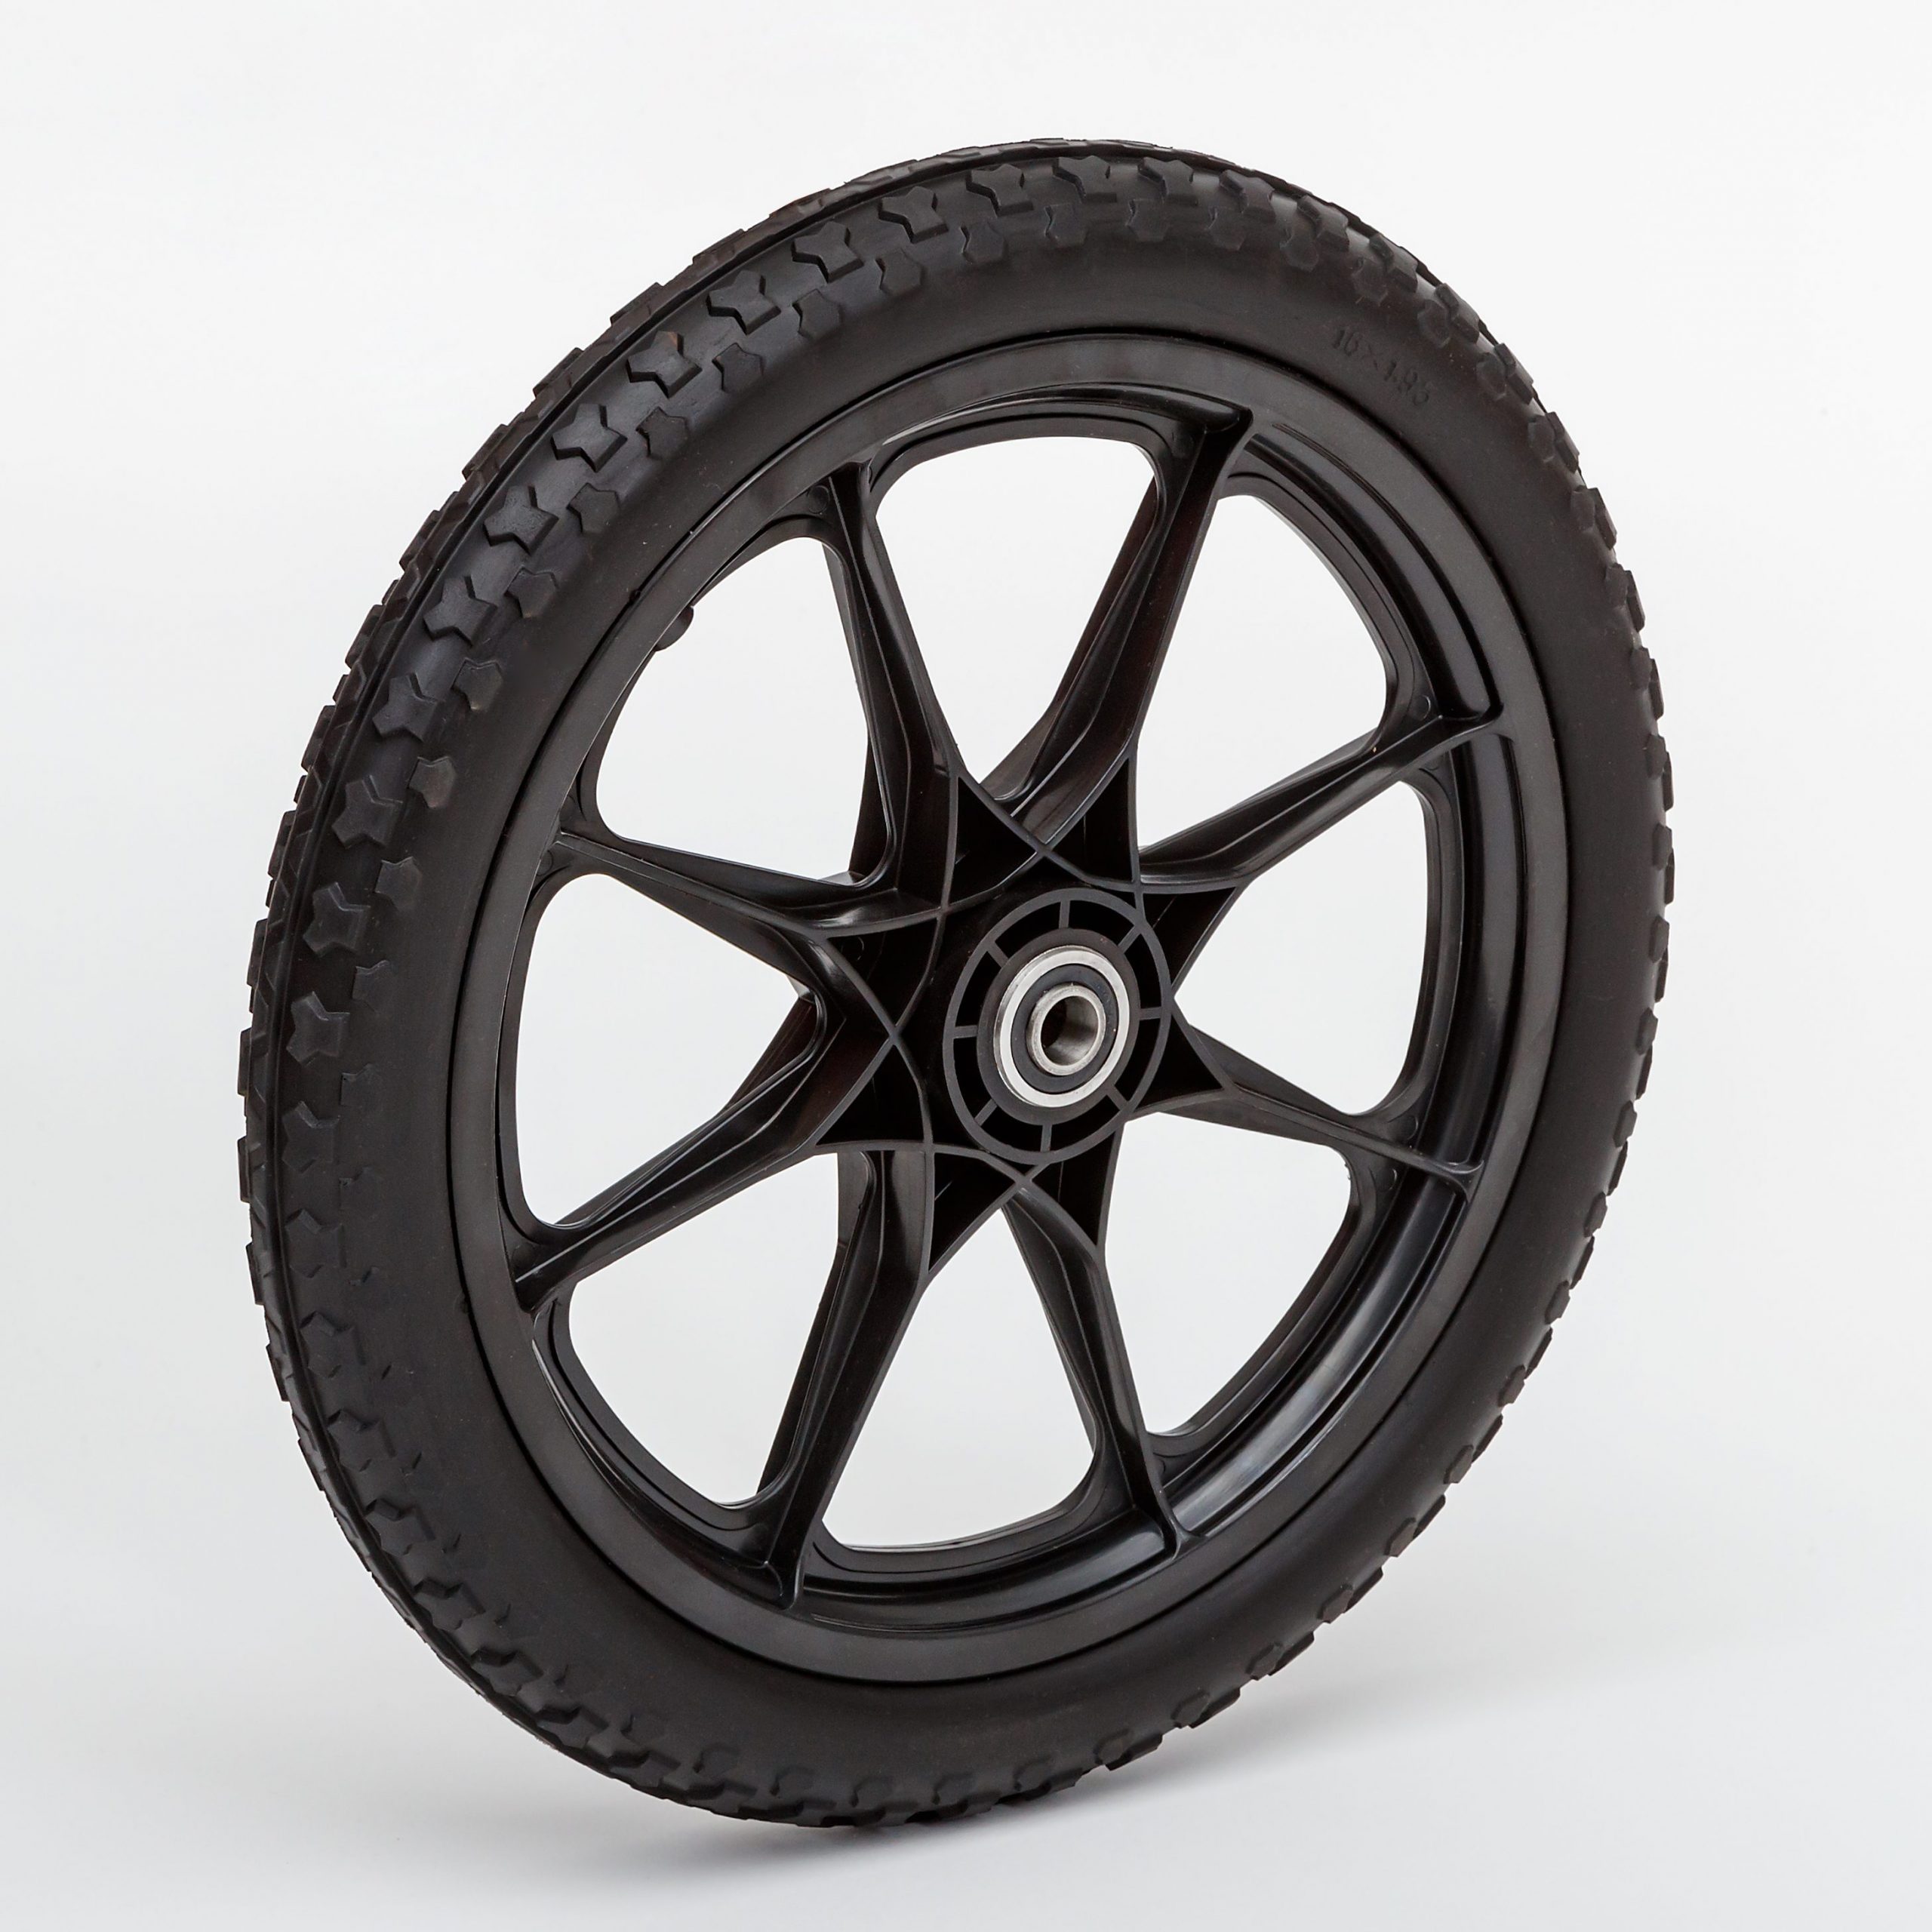 Lapp Wheels 11 To 24 Flat Free And Pneumatic Plastic Spoke Wheel | Free ...